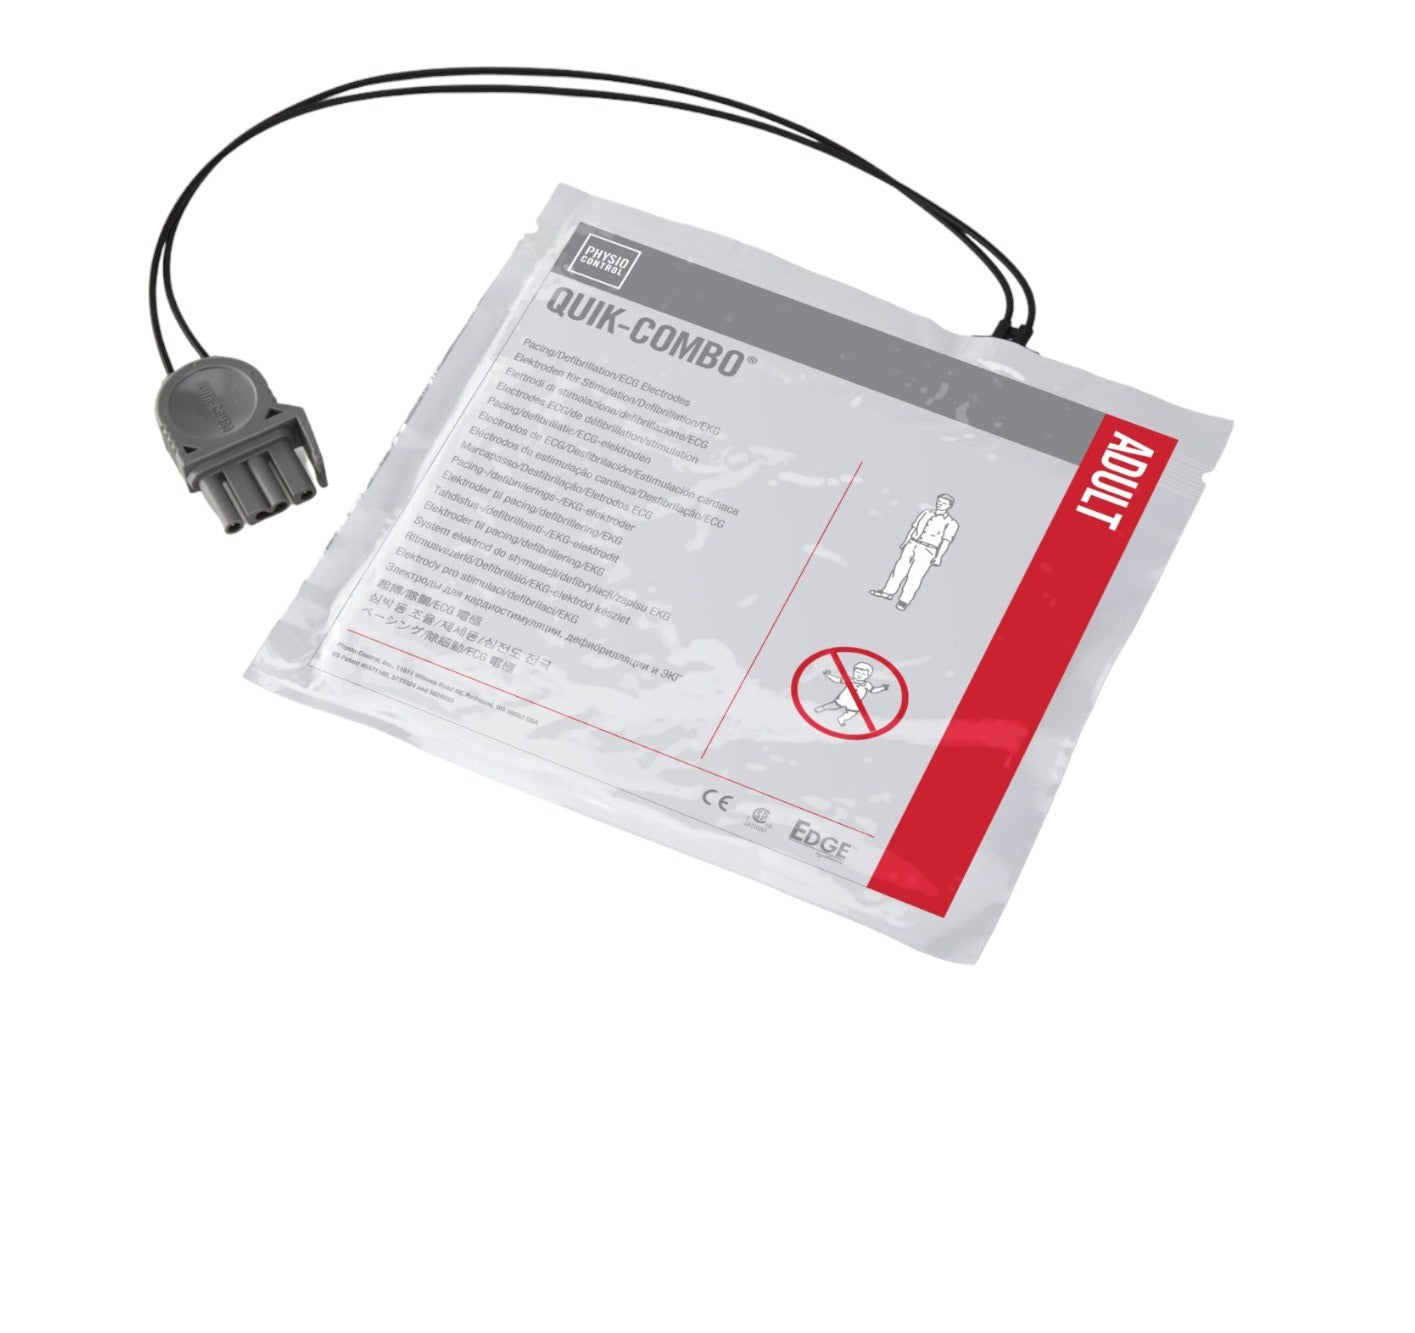 LifePak 1000, Électrode Adulte Quik-Combo REDI-PAK